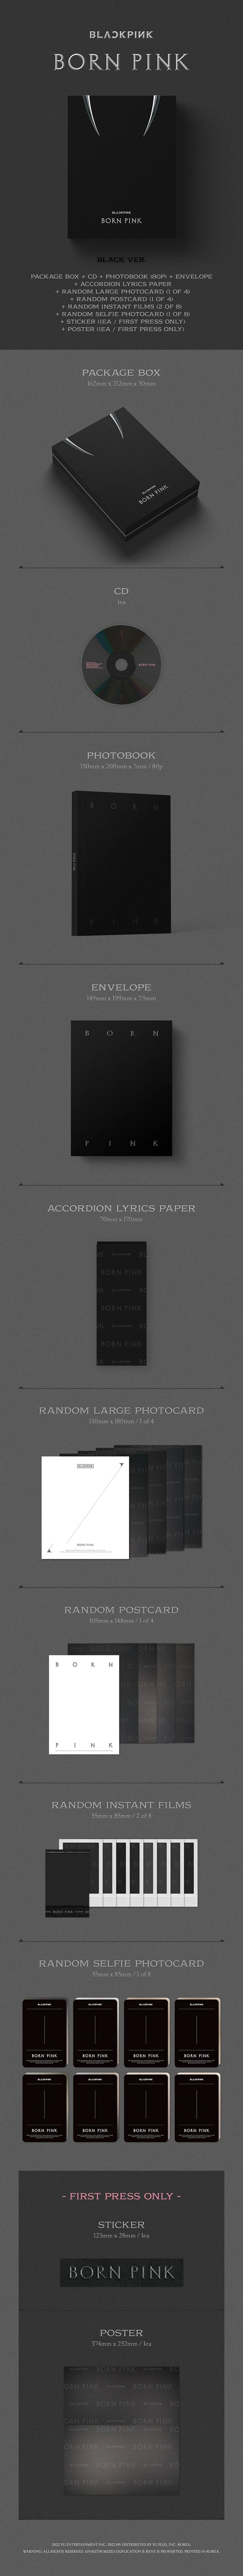 BLACKPINK 2ND ALBUM [BORN PINK] BOX SET VER BLACK Infographic